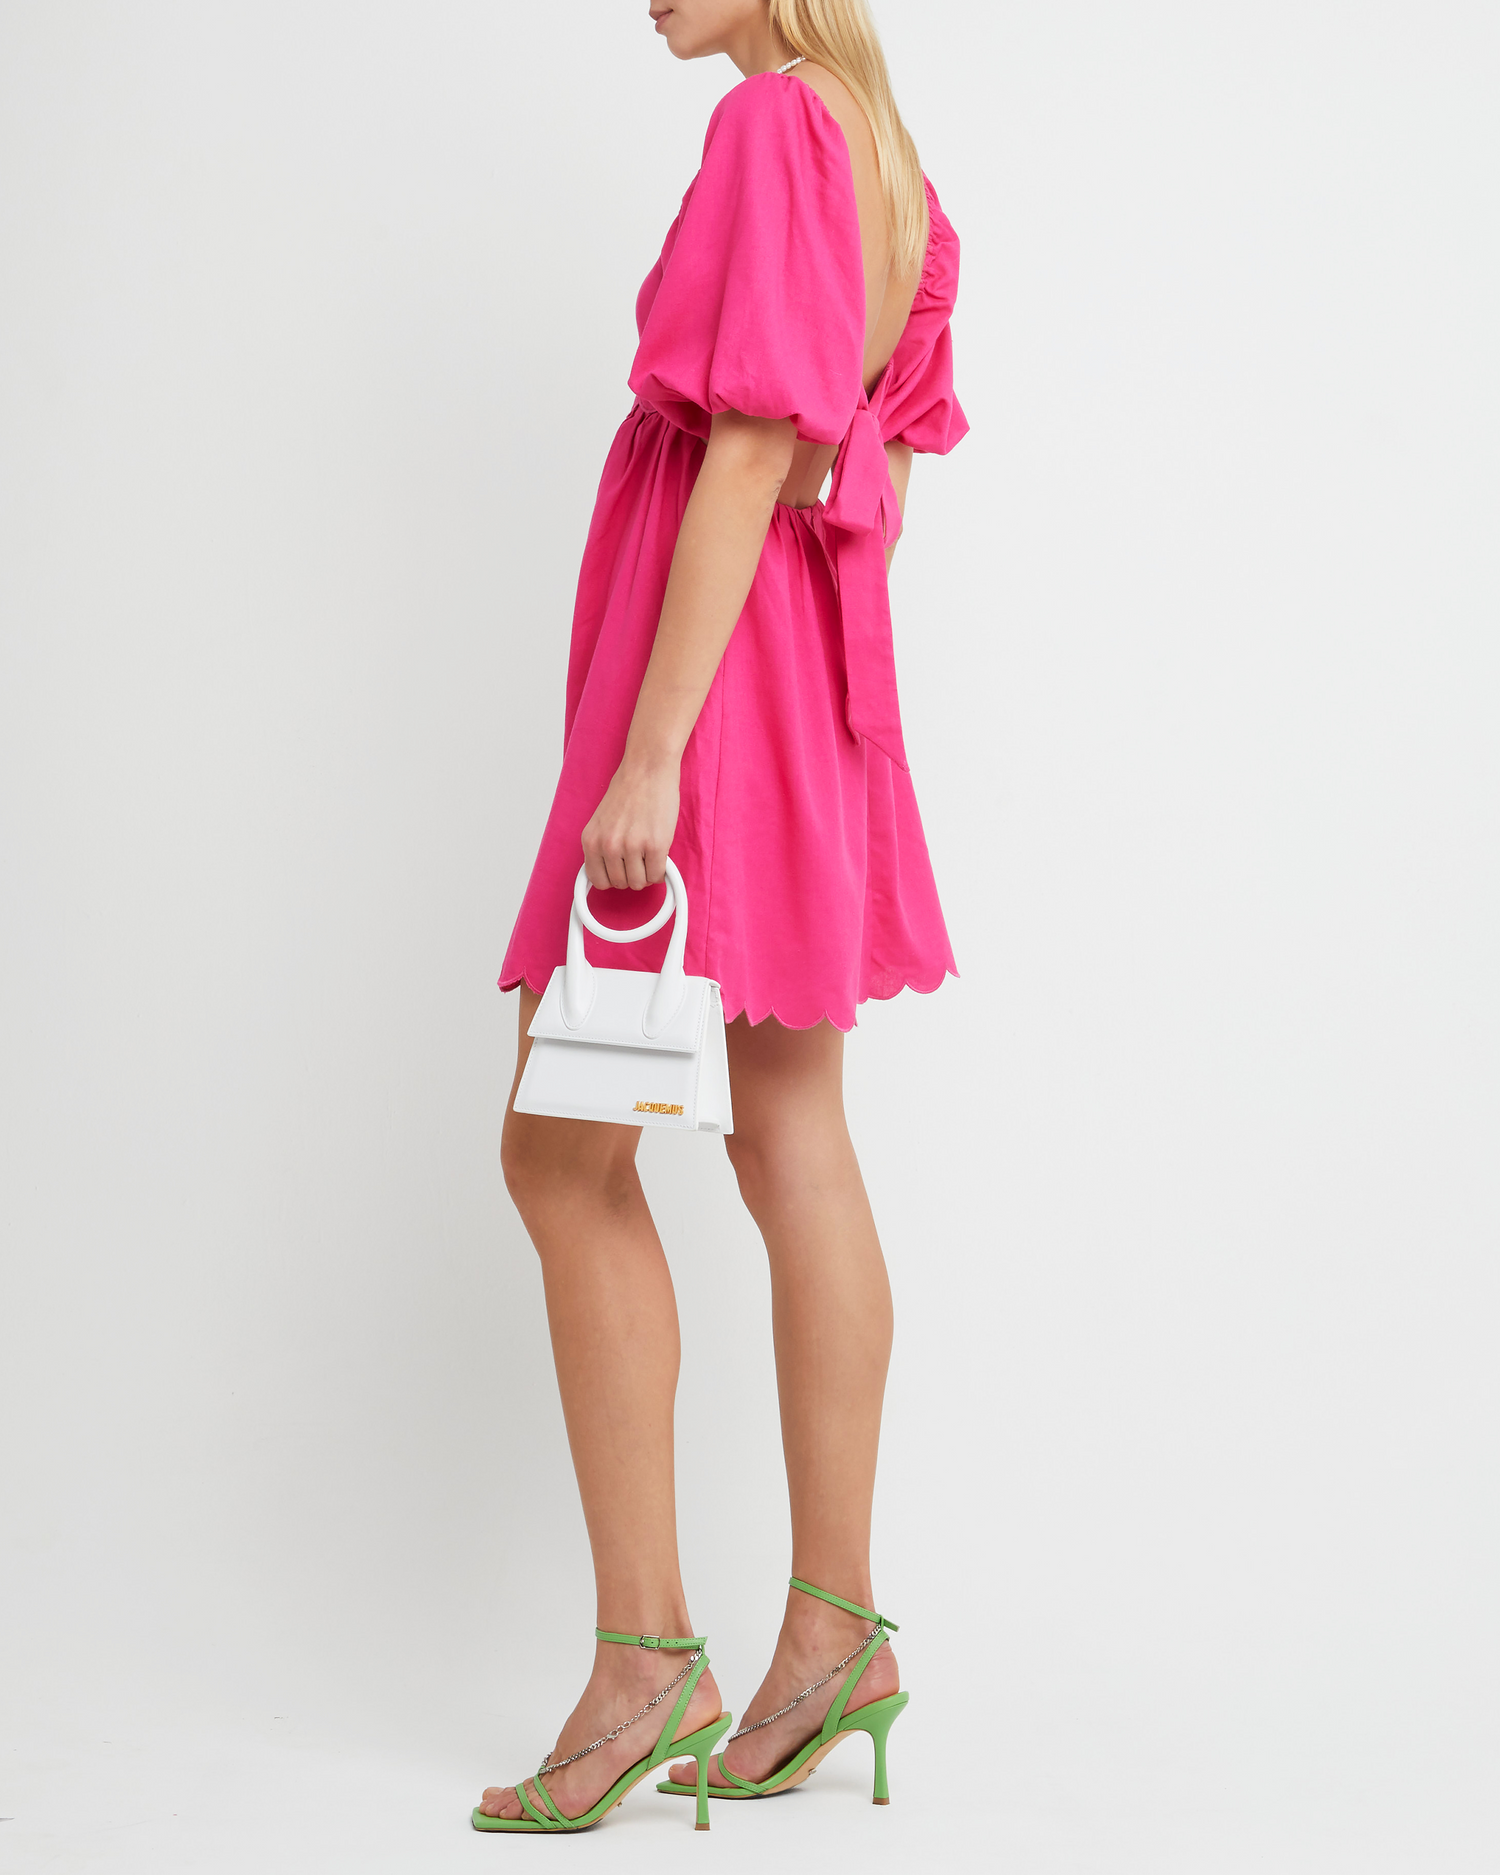 Fifth image of April Dress, a pink mini dress, scalloped hem, babydoll, puff sleeves